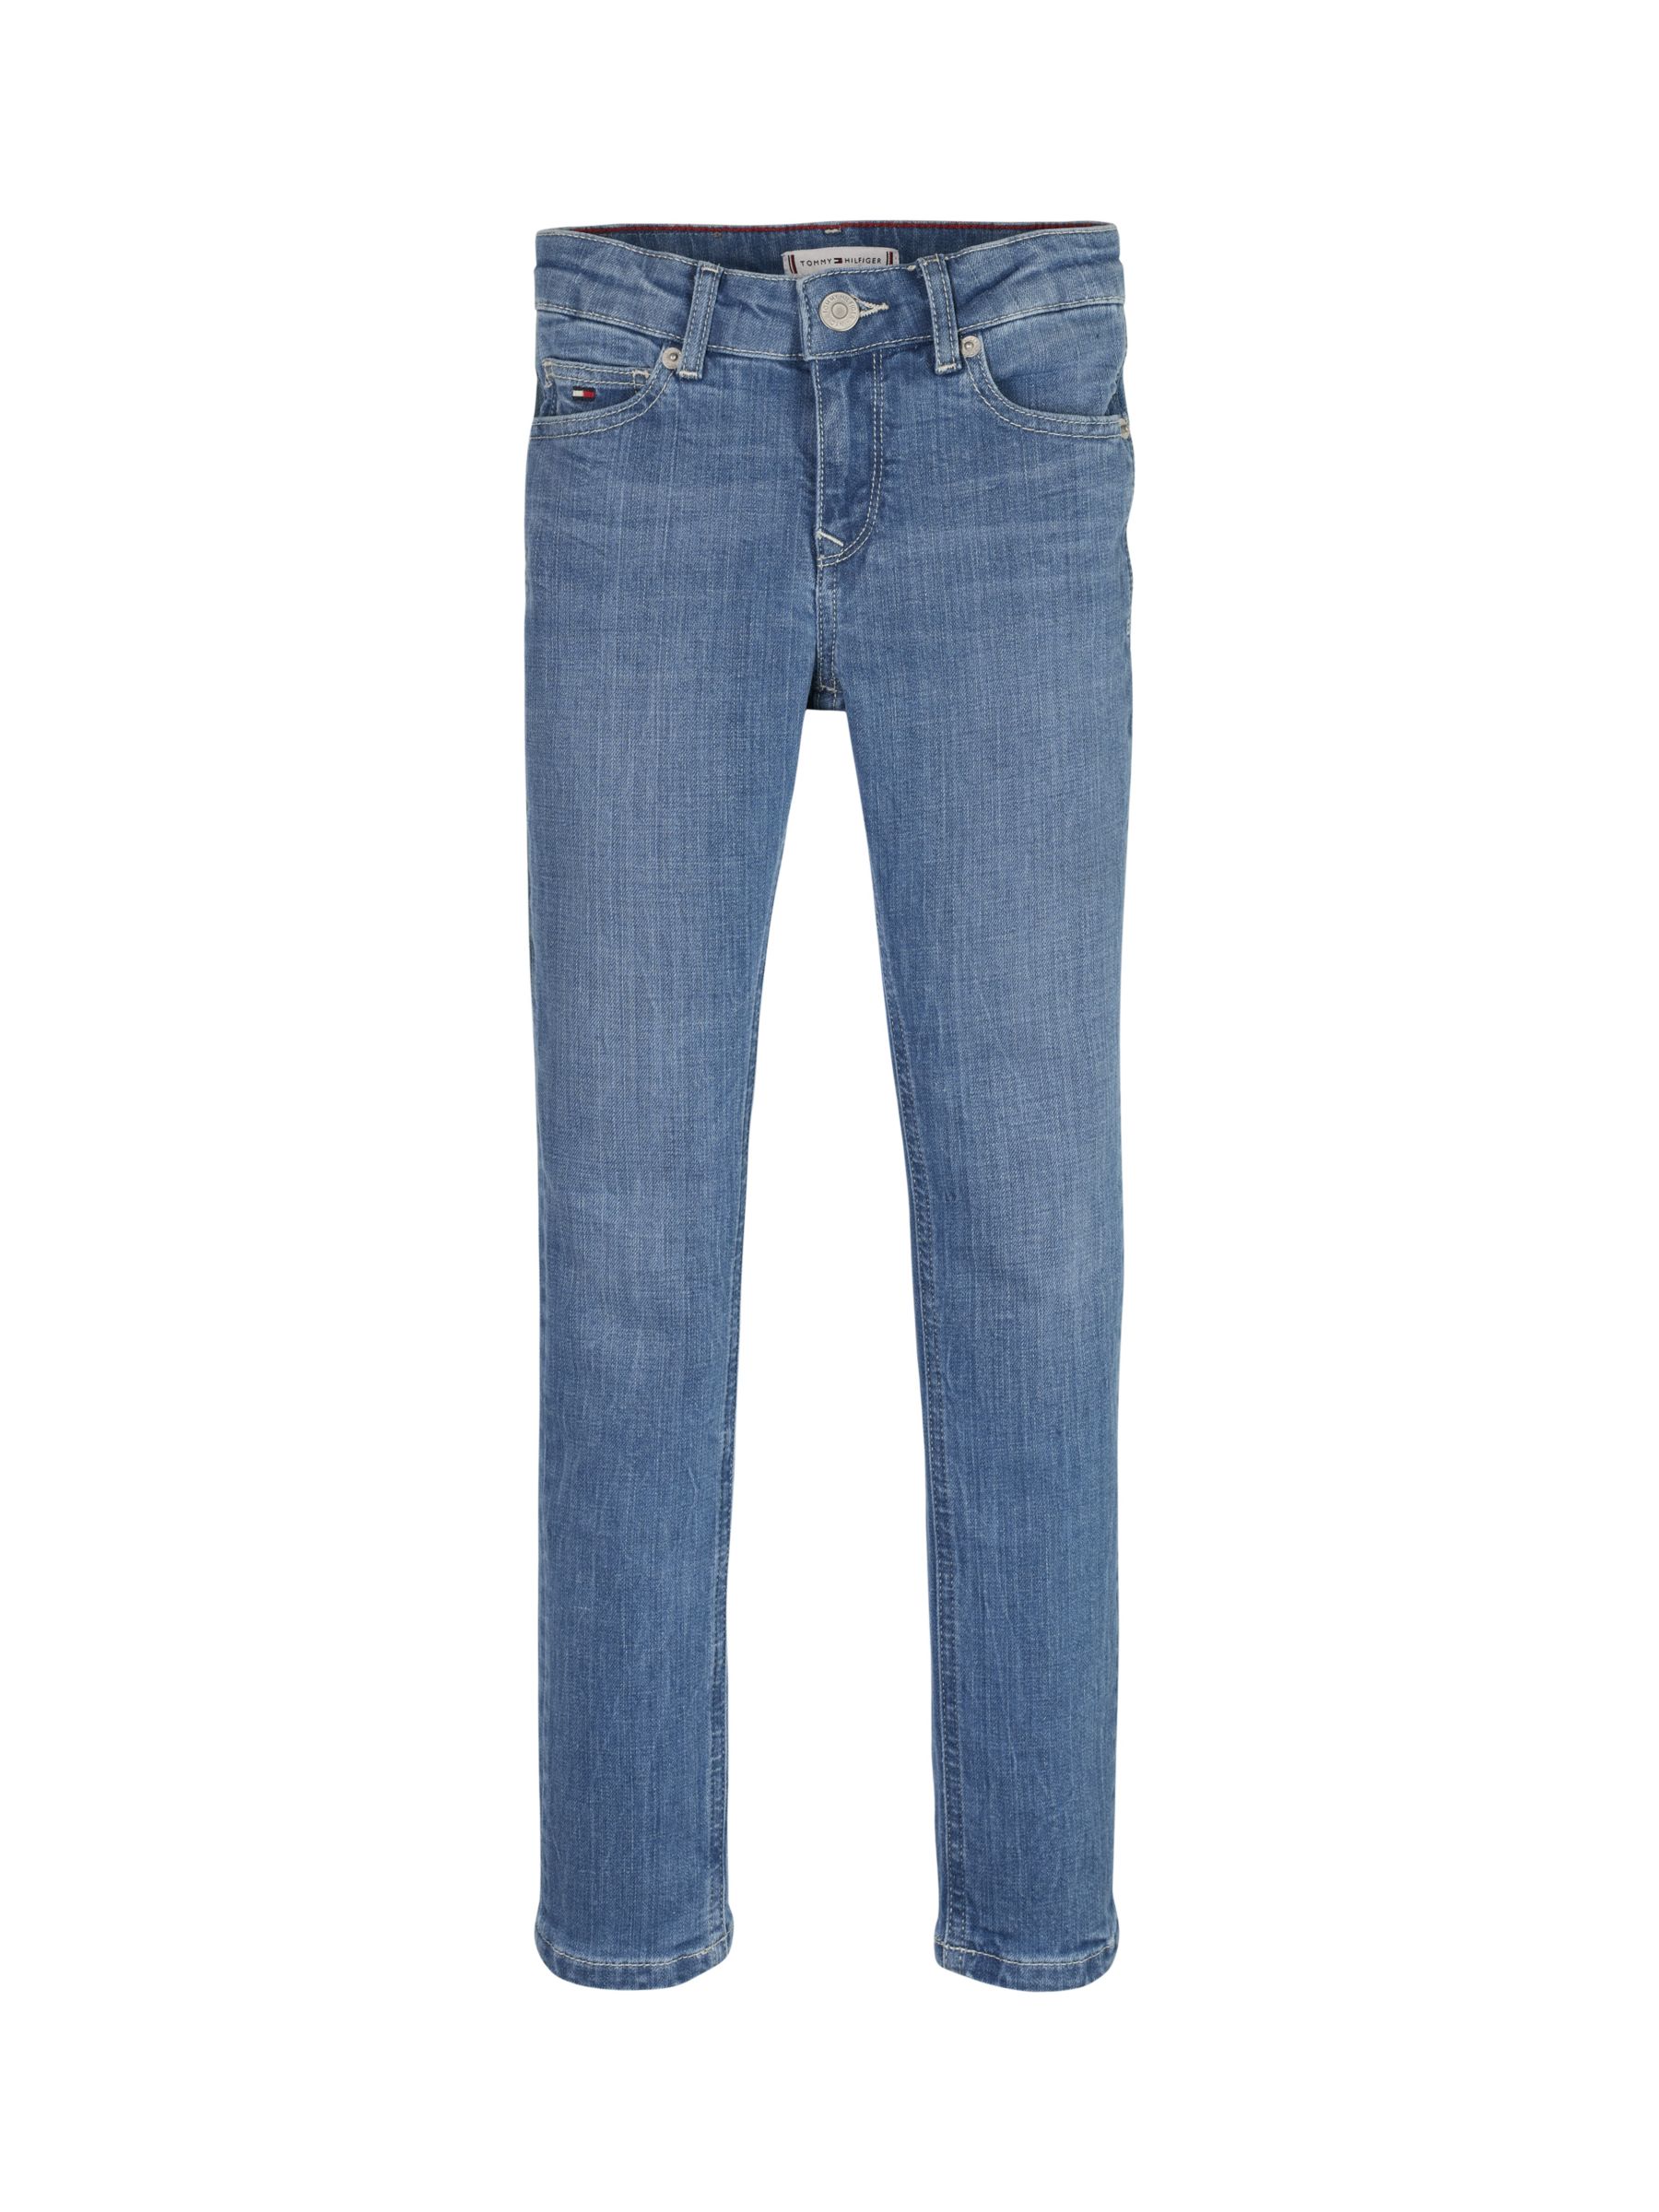 Tommy Hilfiger Kids' Nora Skinny Jeans, Lightused at John Lewis & Partners